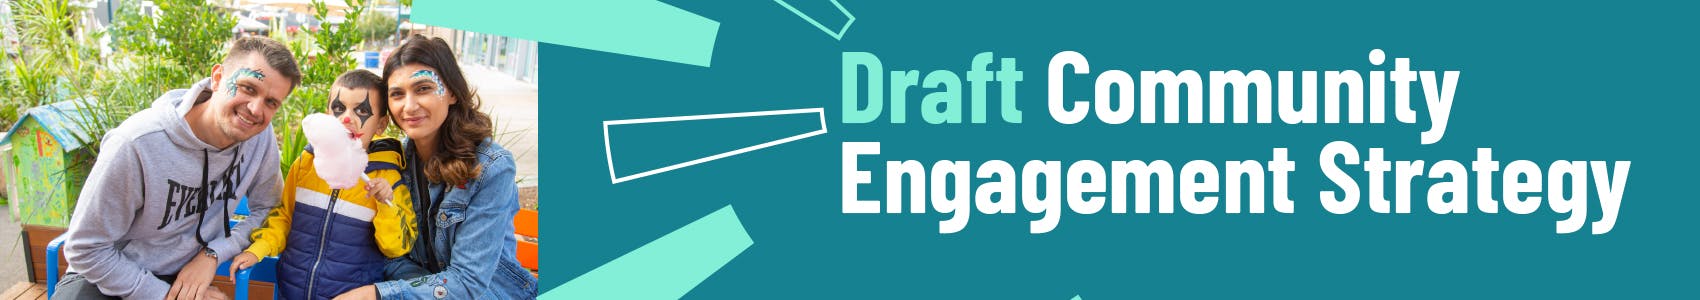 Draft community engagement strategy